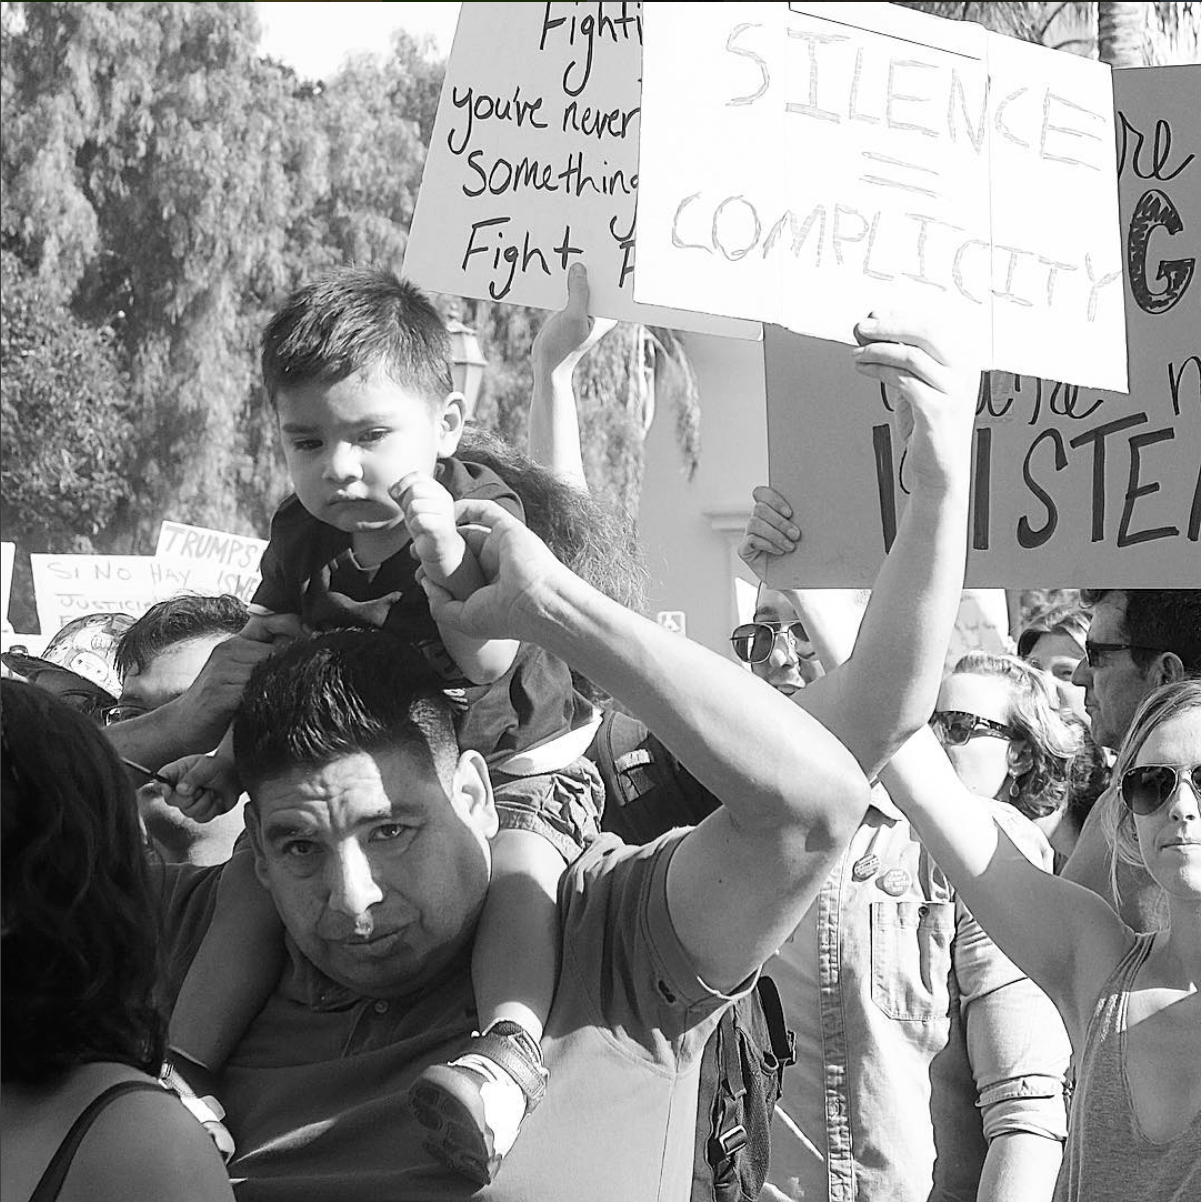  Santa Barbara, CA.&nbsp; Protestors march in solidarity against Trump in downtown SB.&nbsp; #SnapshotLives &nbsp; #fujixt1   